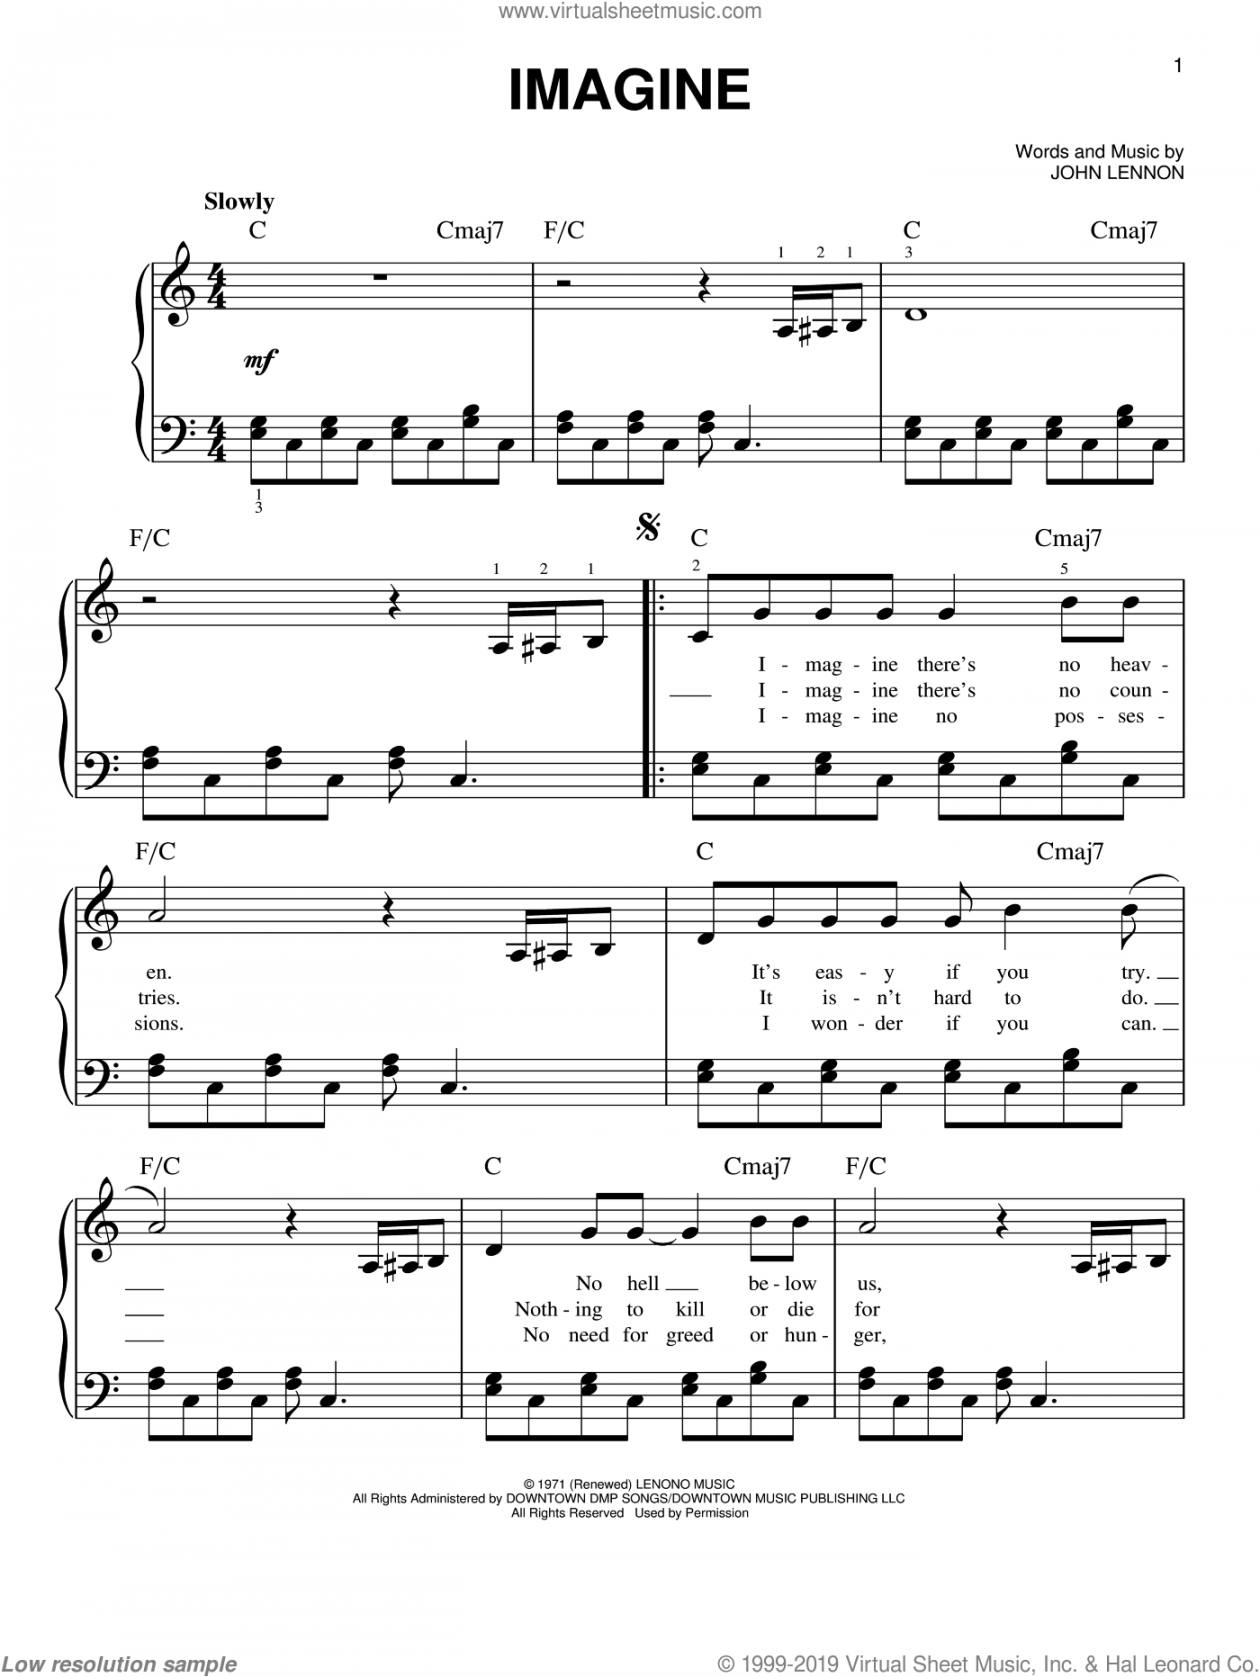 Free Printable Sheet Music With Lyrics - Printable - Pin on โน้ตเปียโน